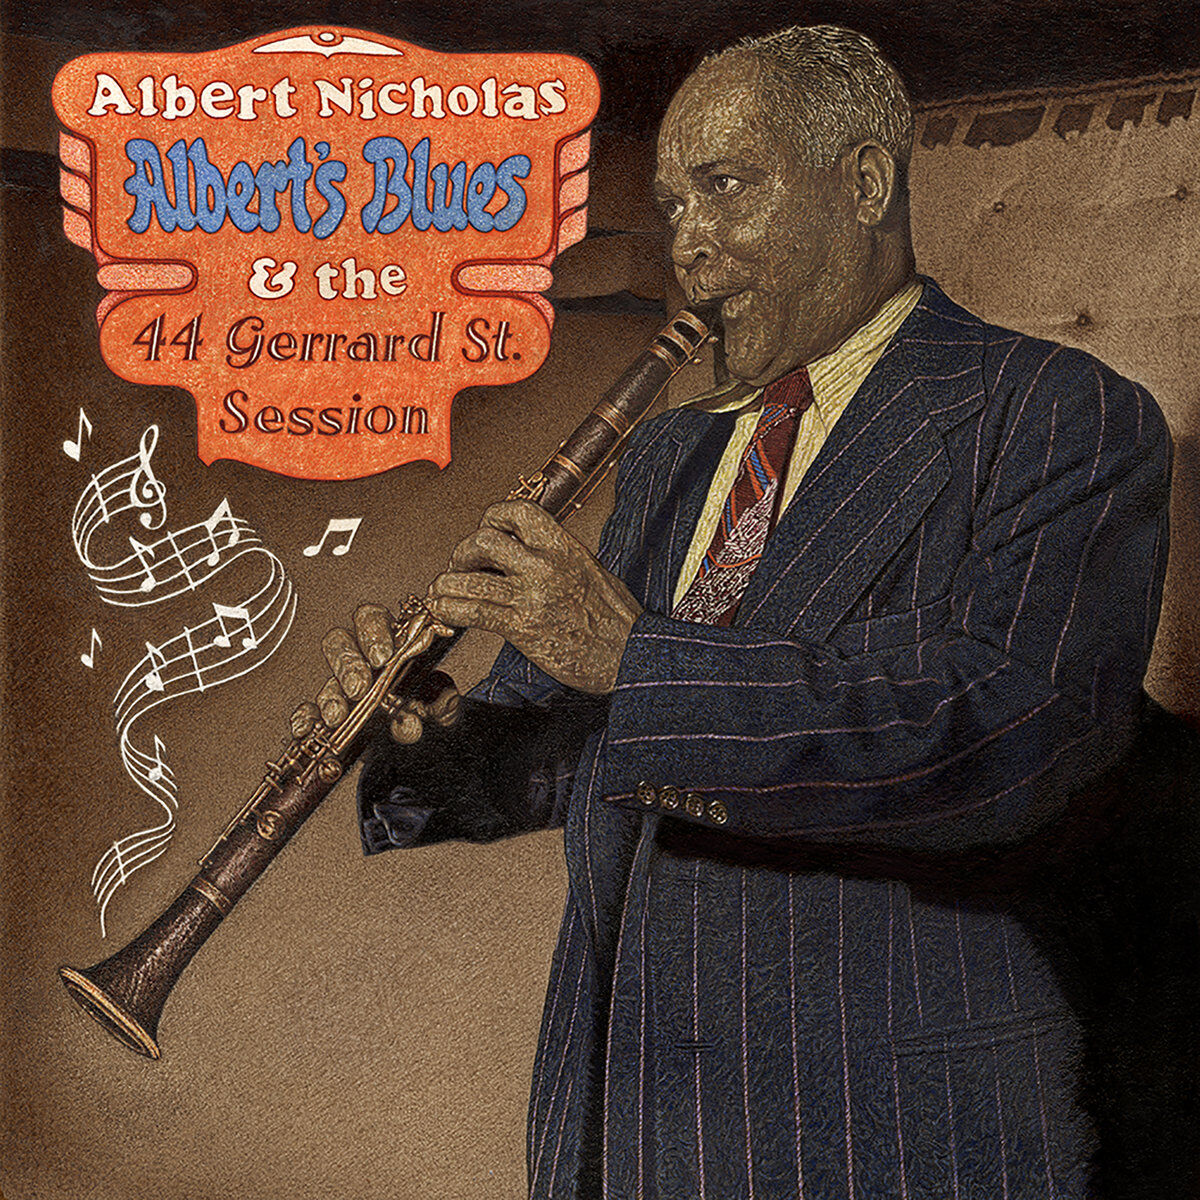 Albert Nicholas • Albert’s Blues & the 44 Gerrard St. Session